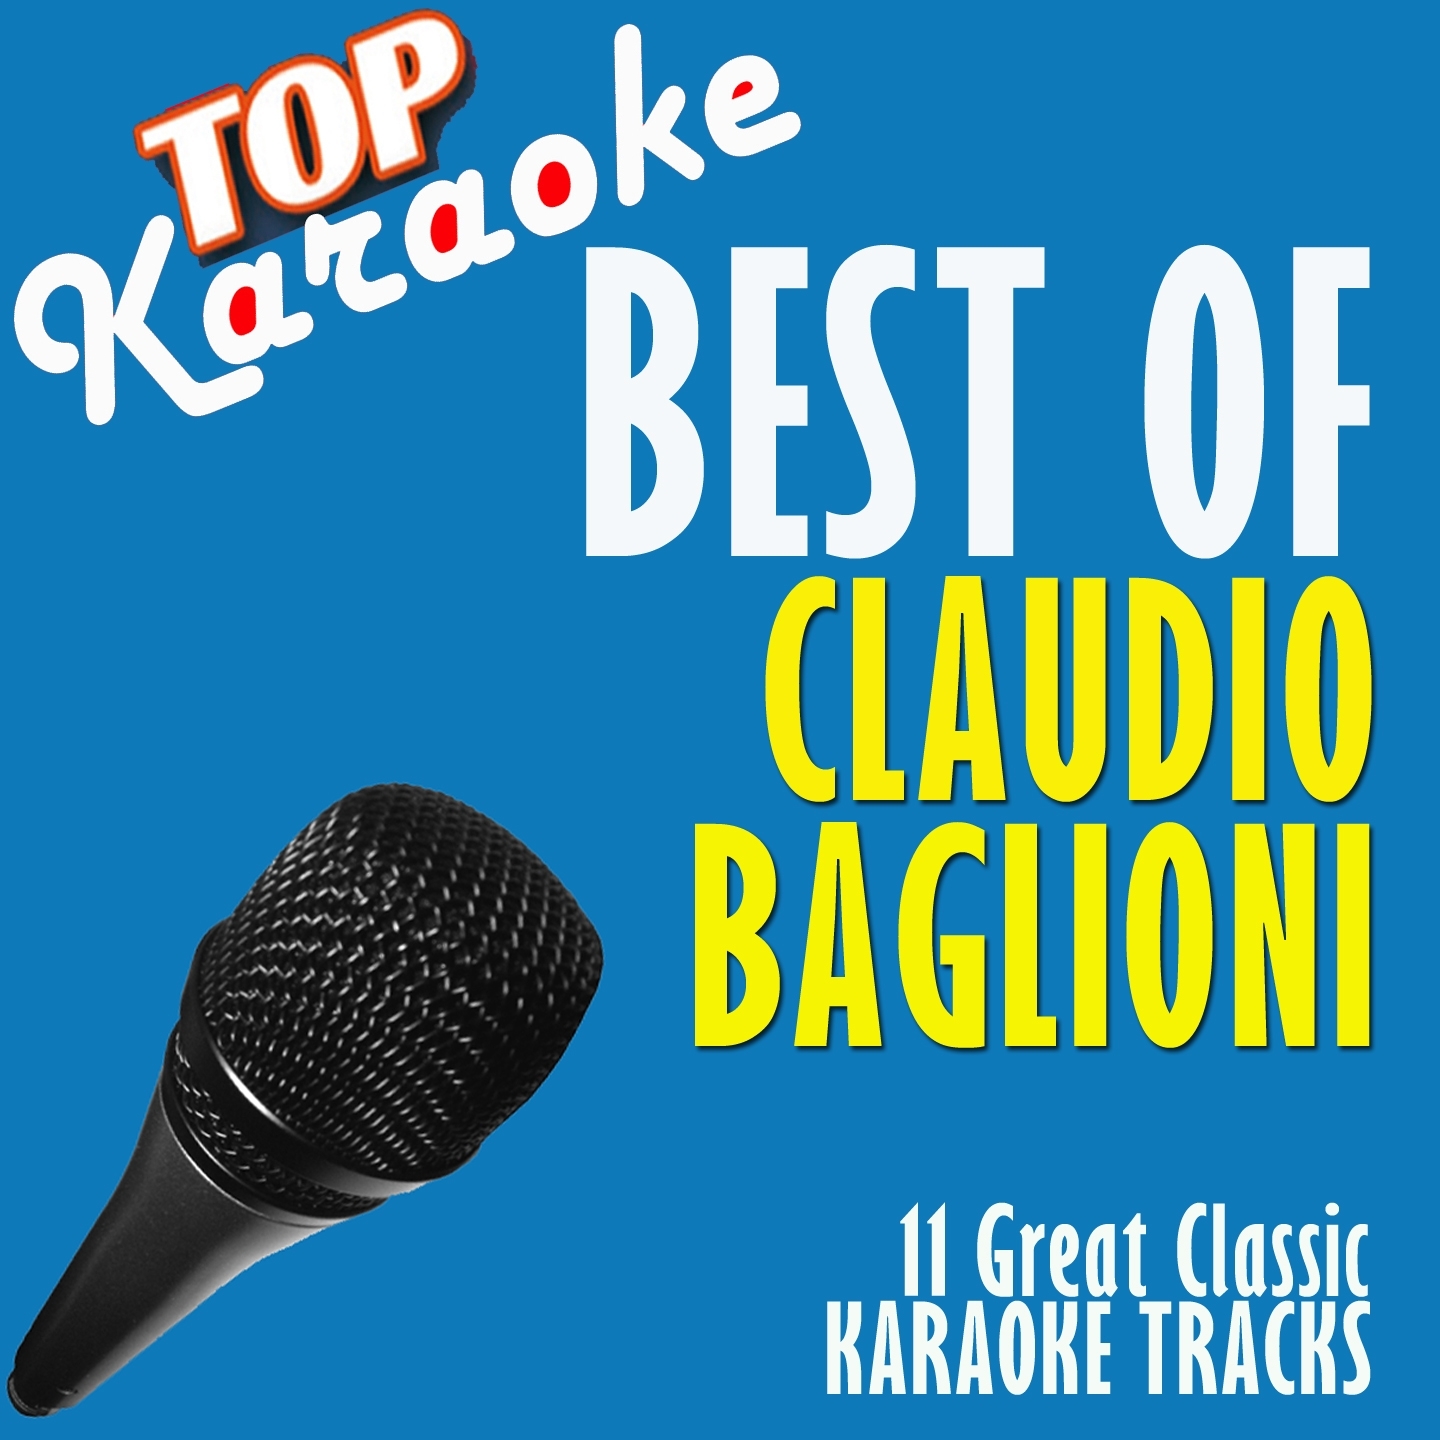 Best of Claudio Baglioni